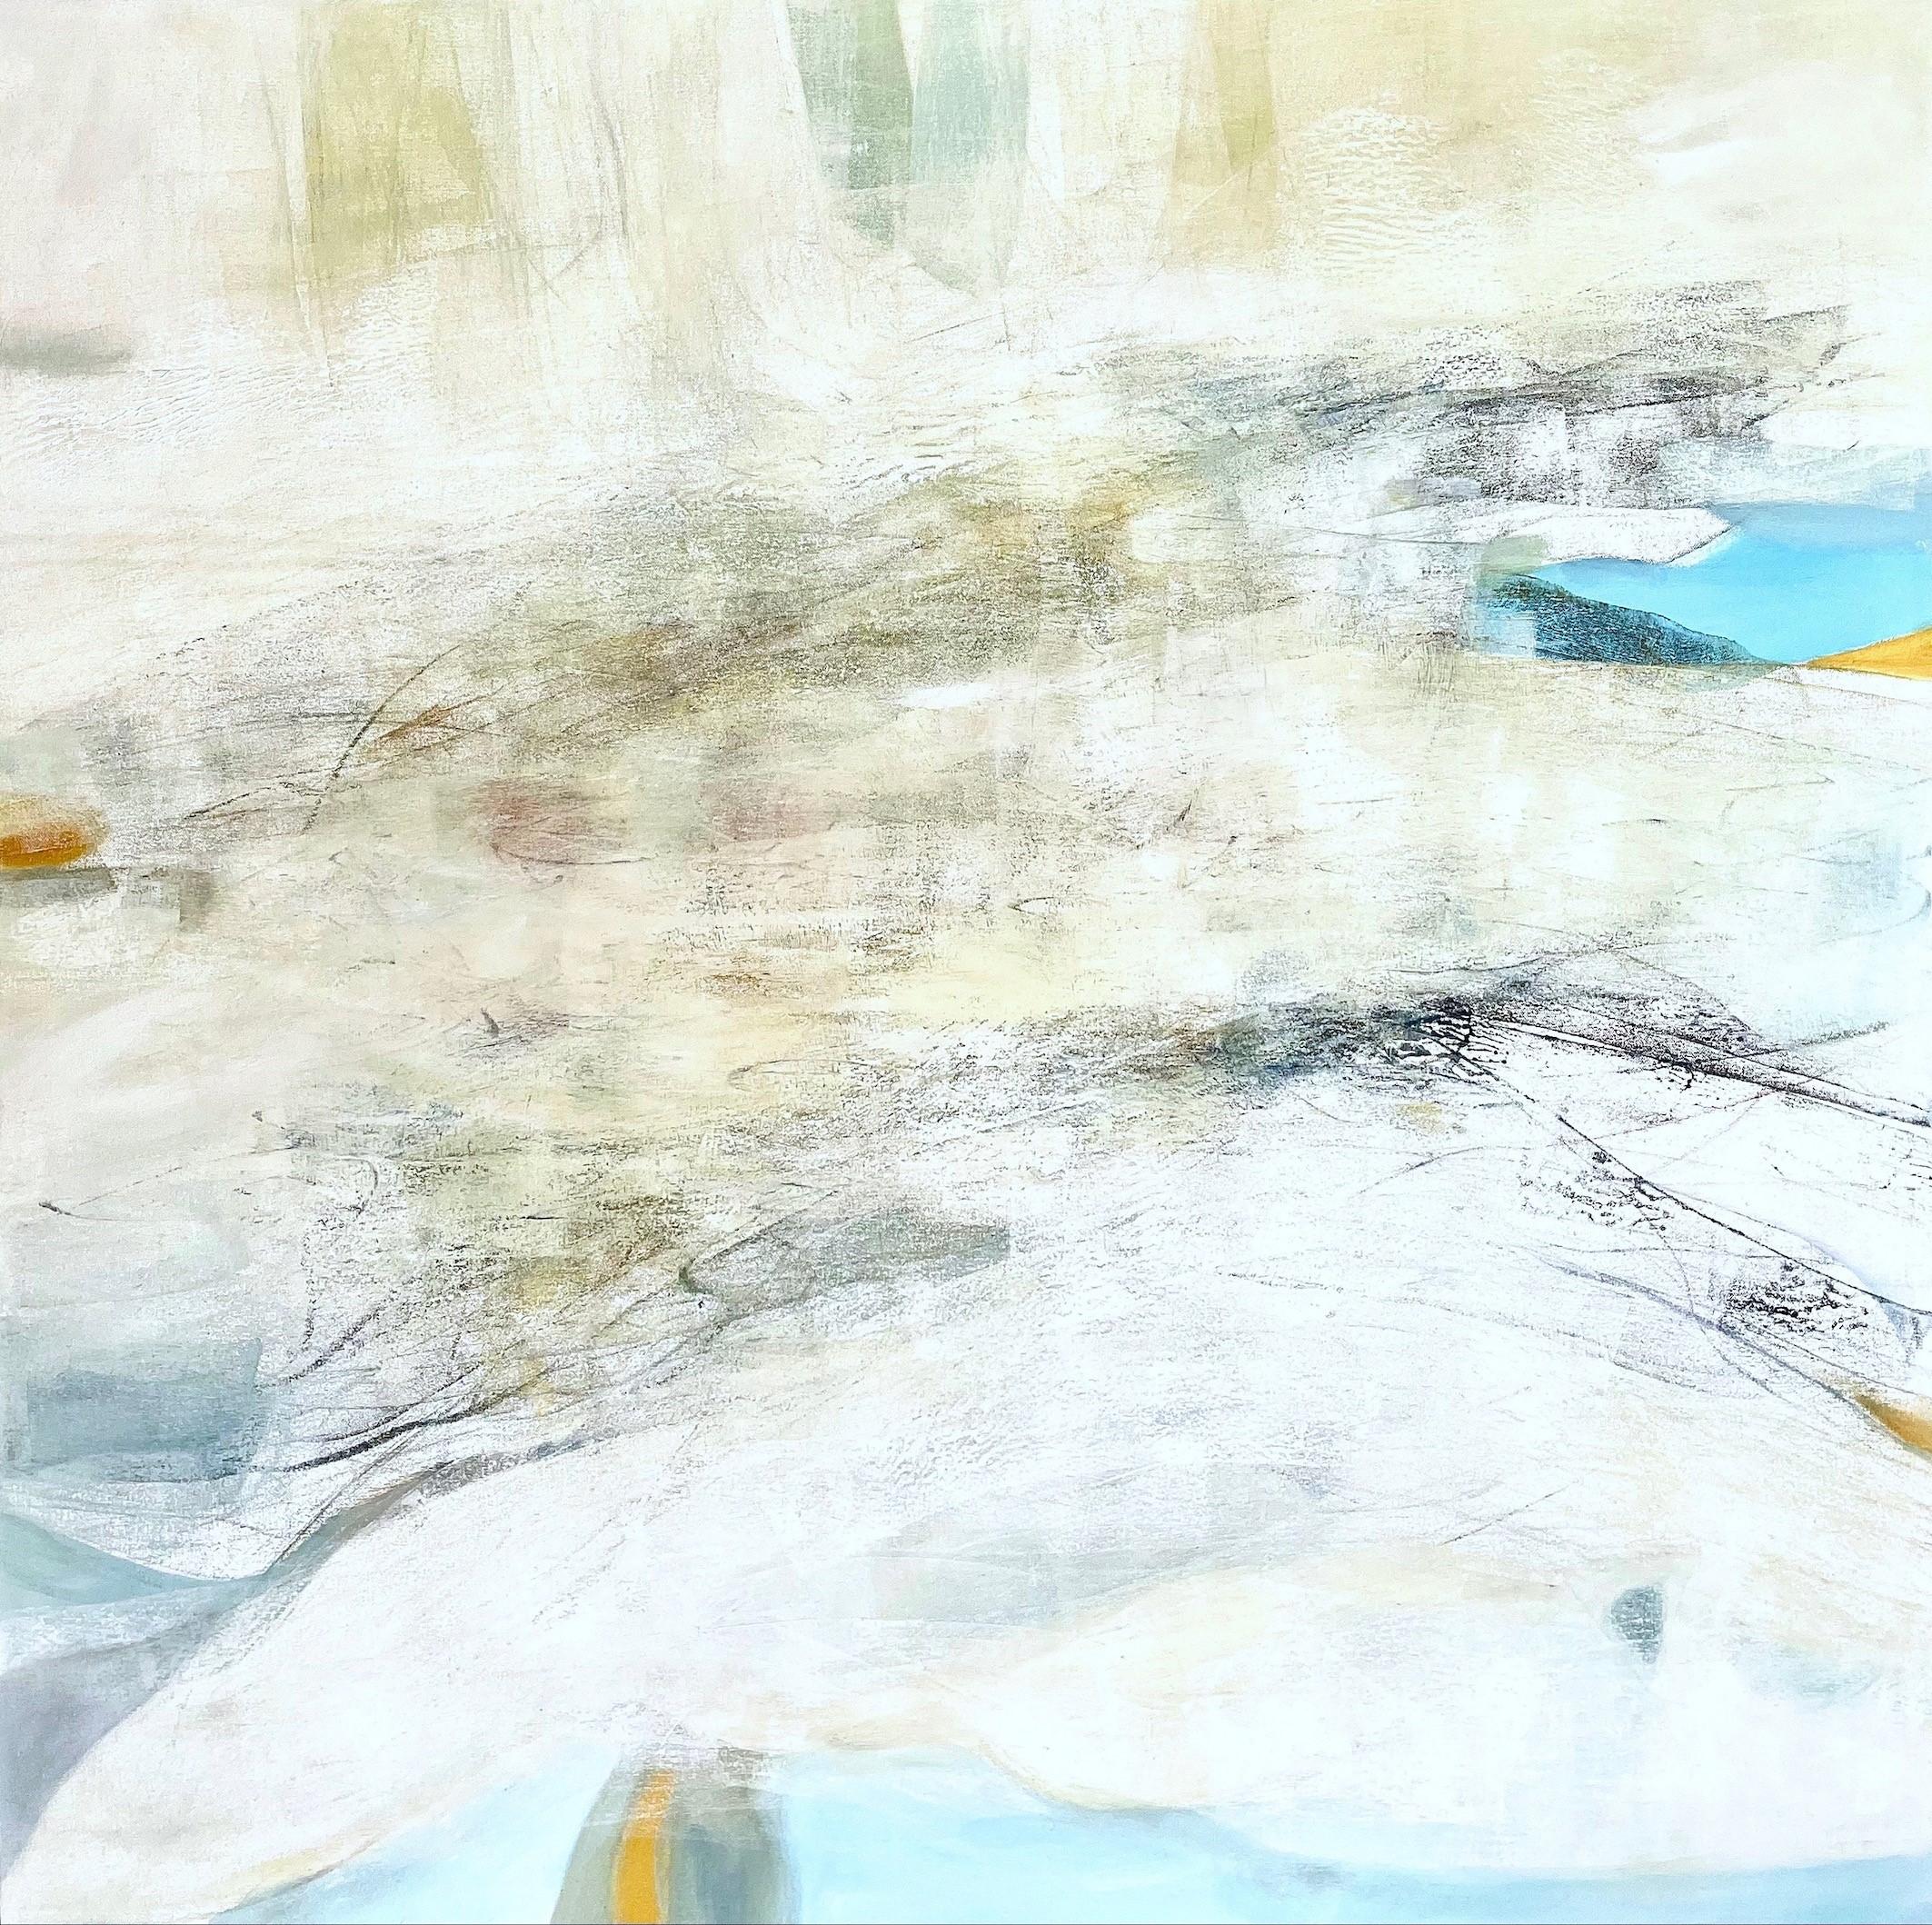 Salt - dreamlike oil and wax abstract painting